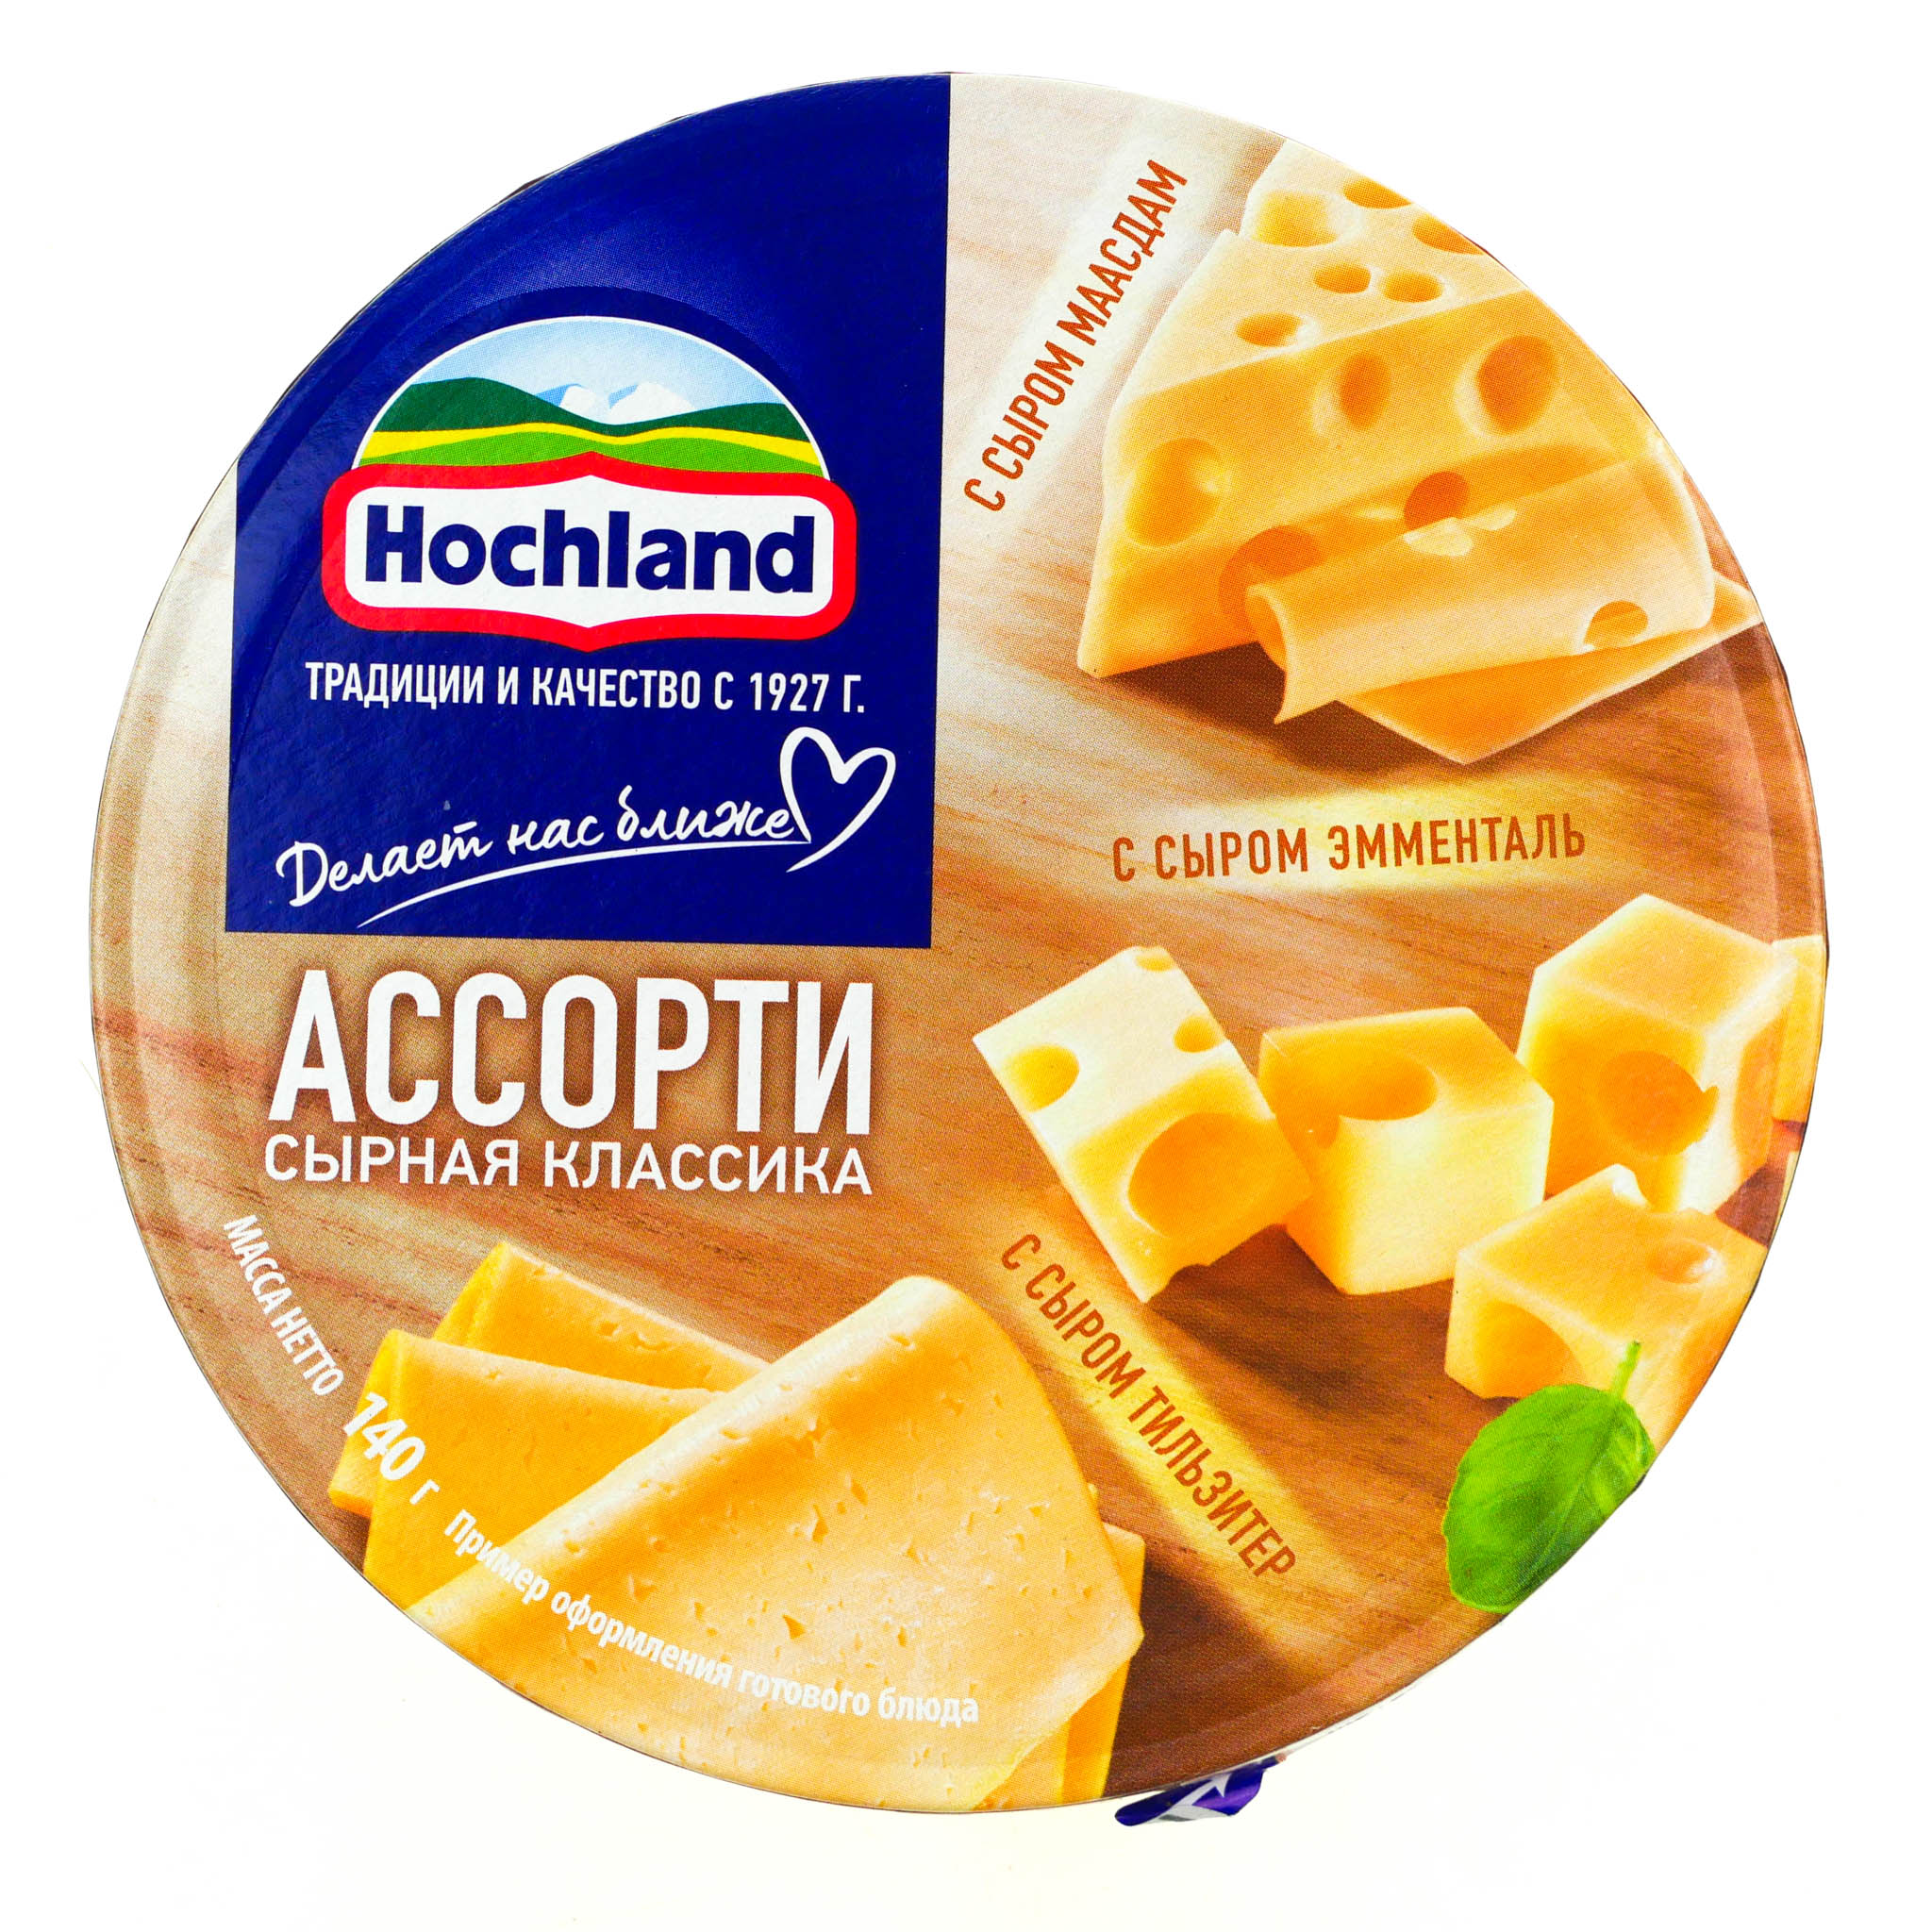 Сыр Hochland сырная классика